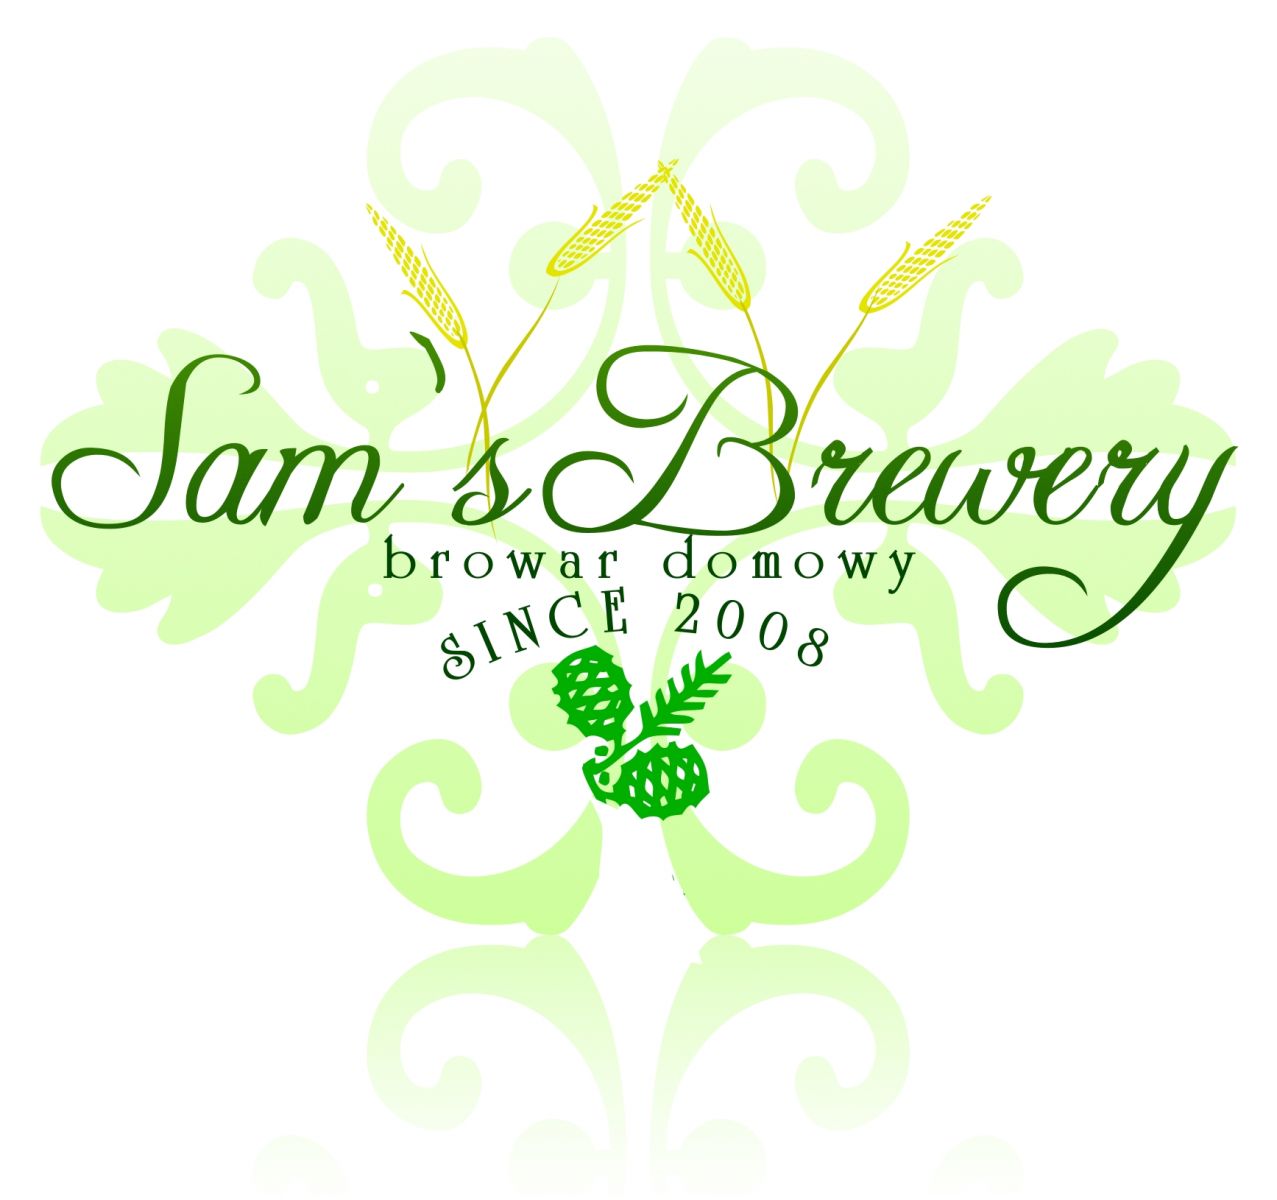 Sam's Brewery